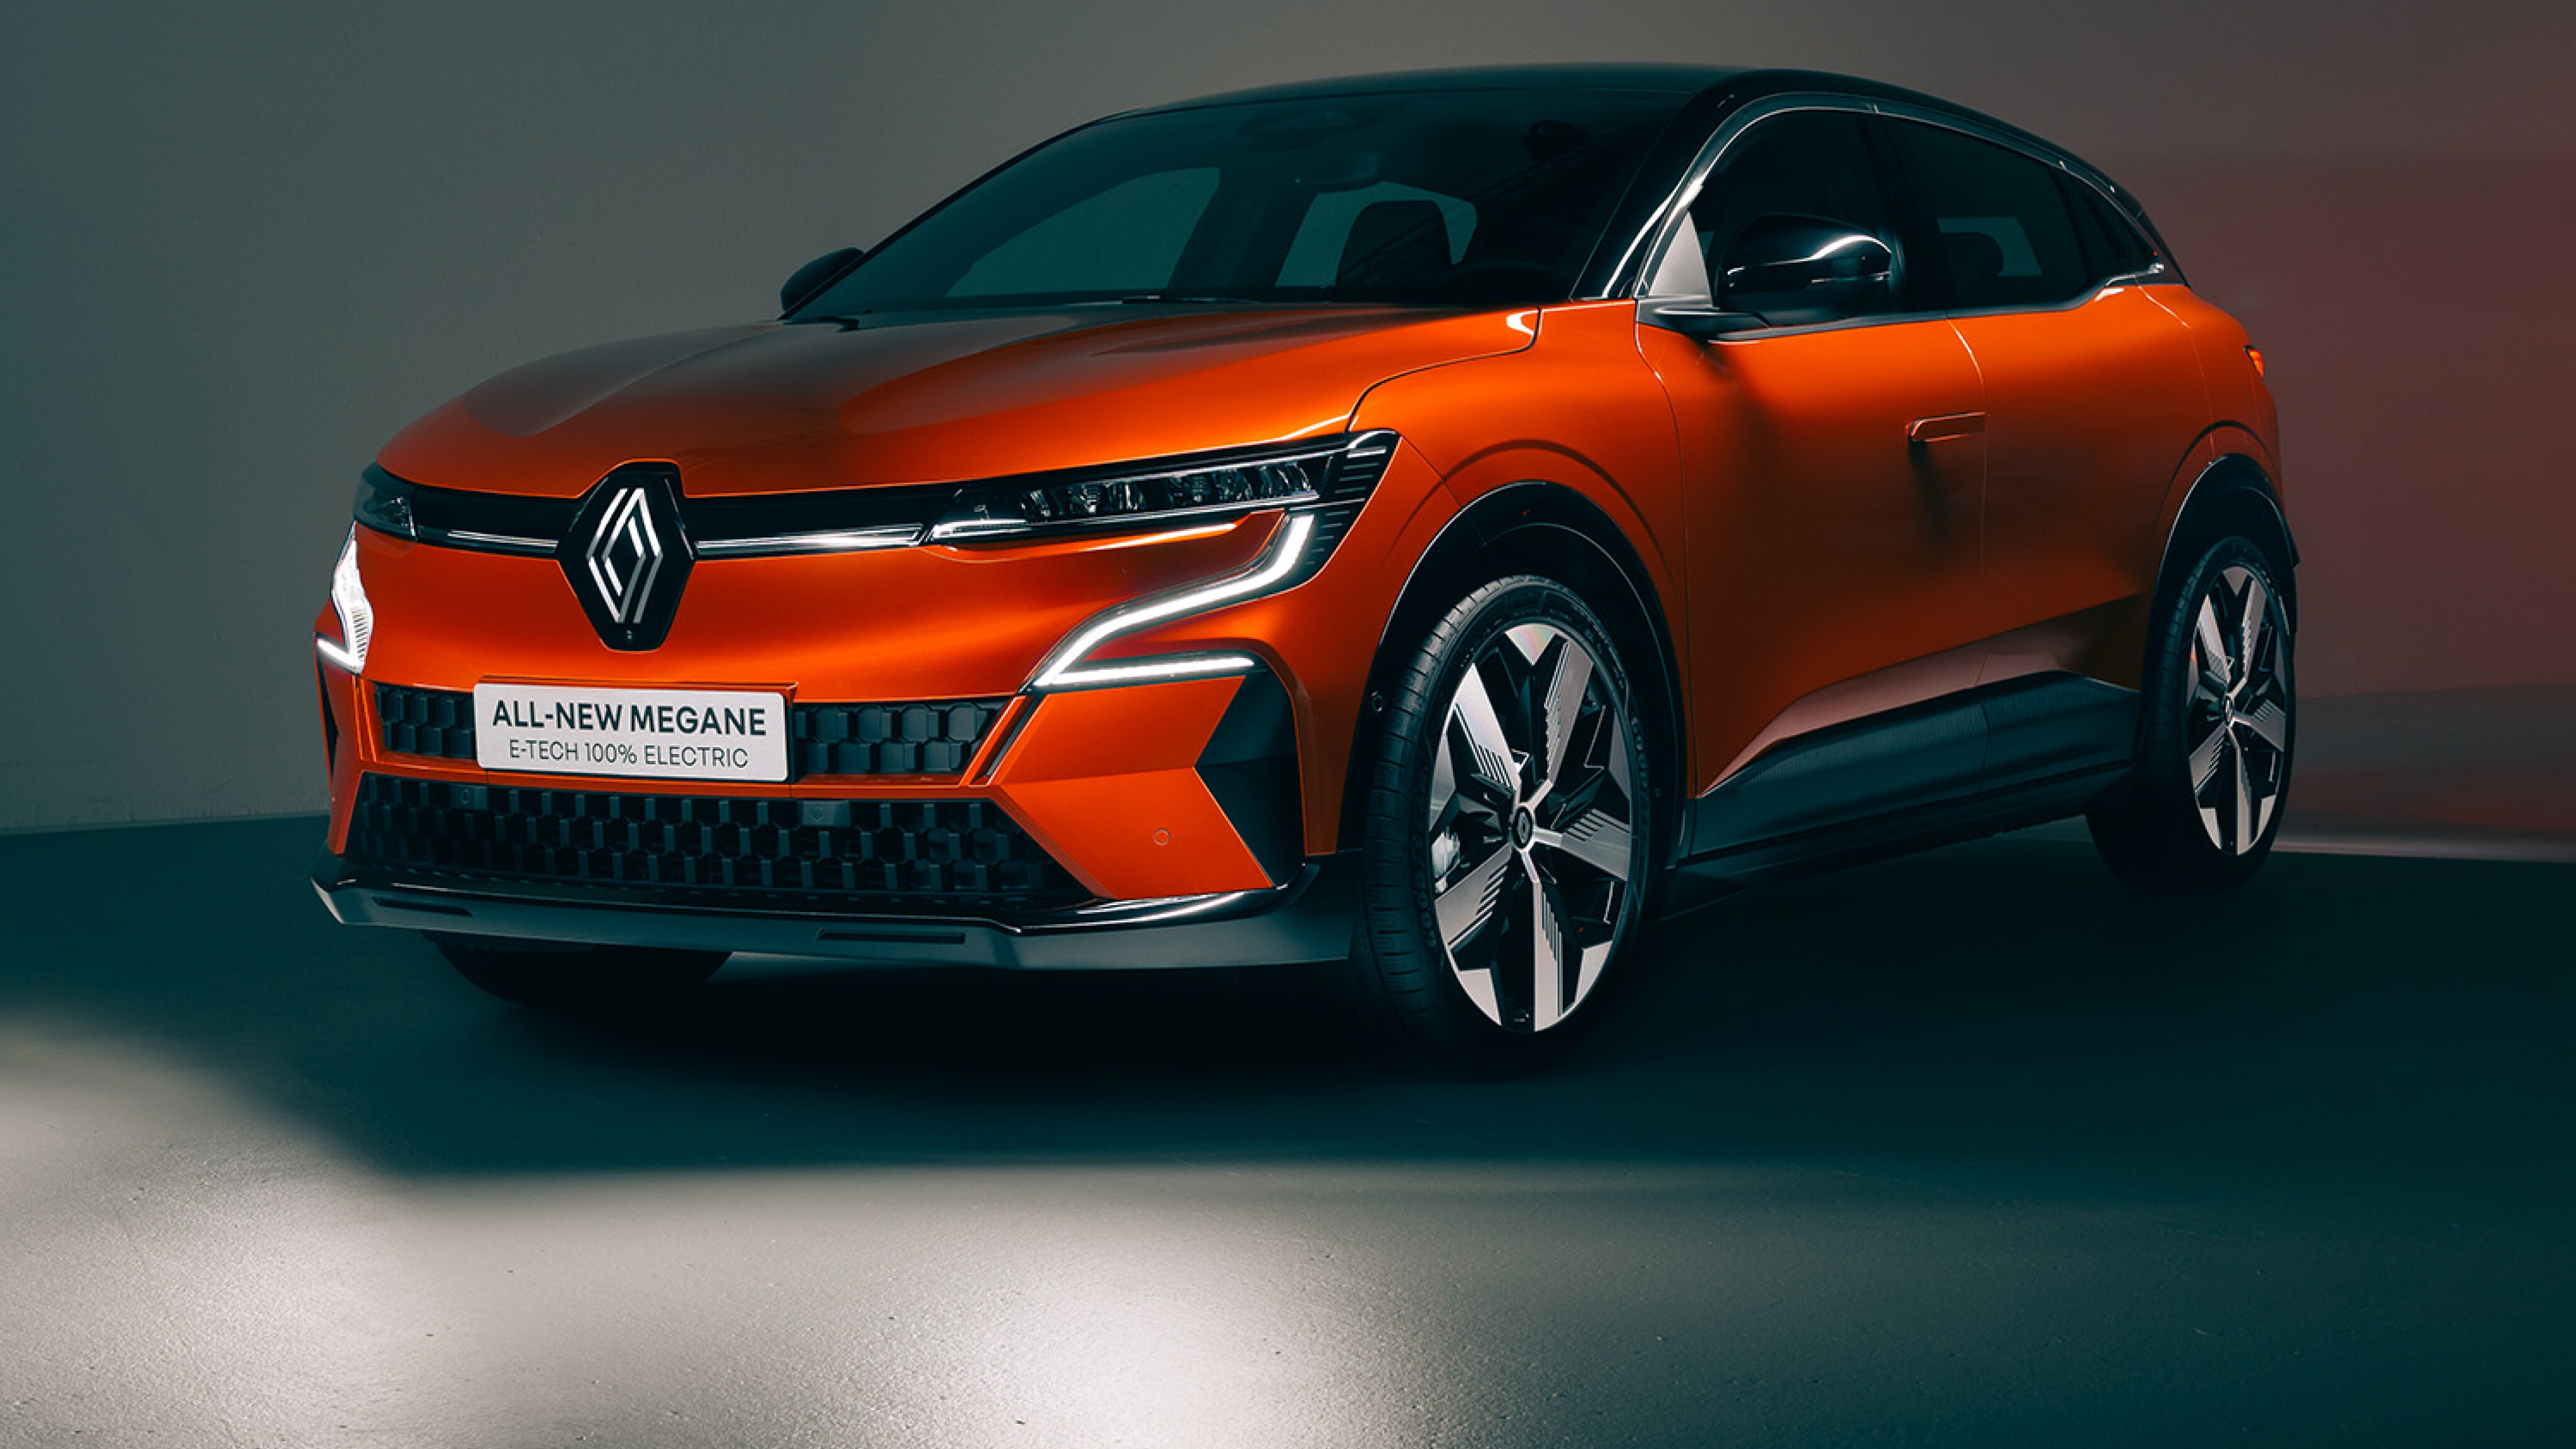 2022 Renault Megane E-Tech confirmed for Australia